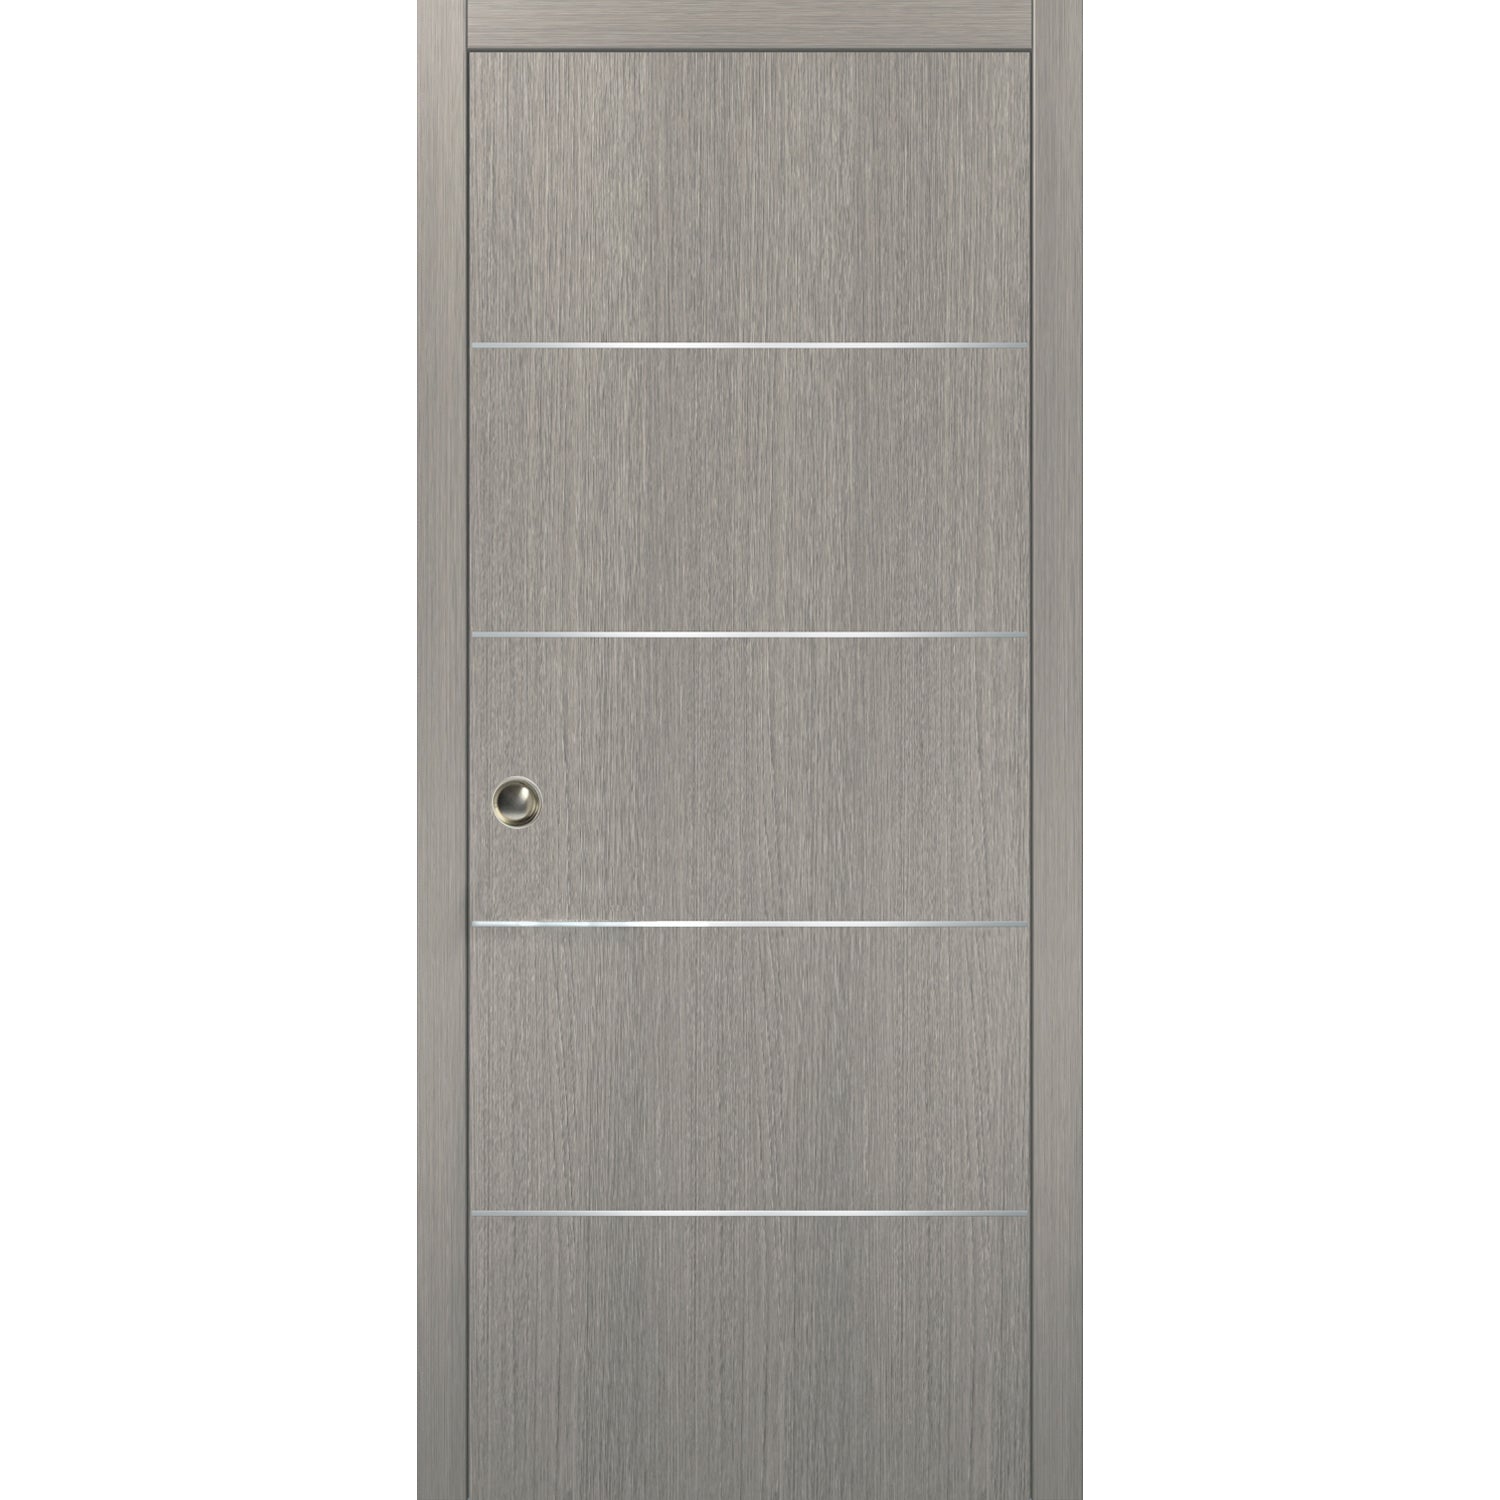 SARTODOORS Pocket Door 42 x 96 with Frames | Planum 0020 Grey Oak | Rail Hardware | Wood Sliding Doors